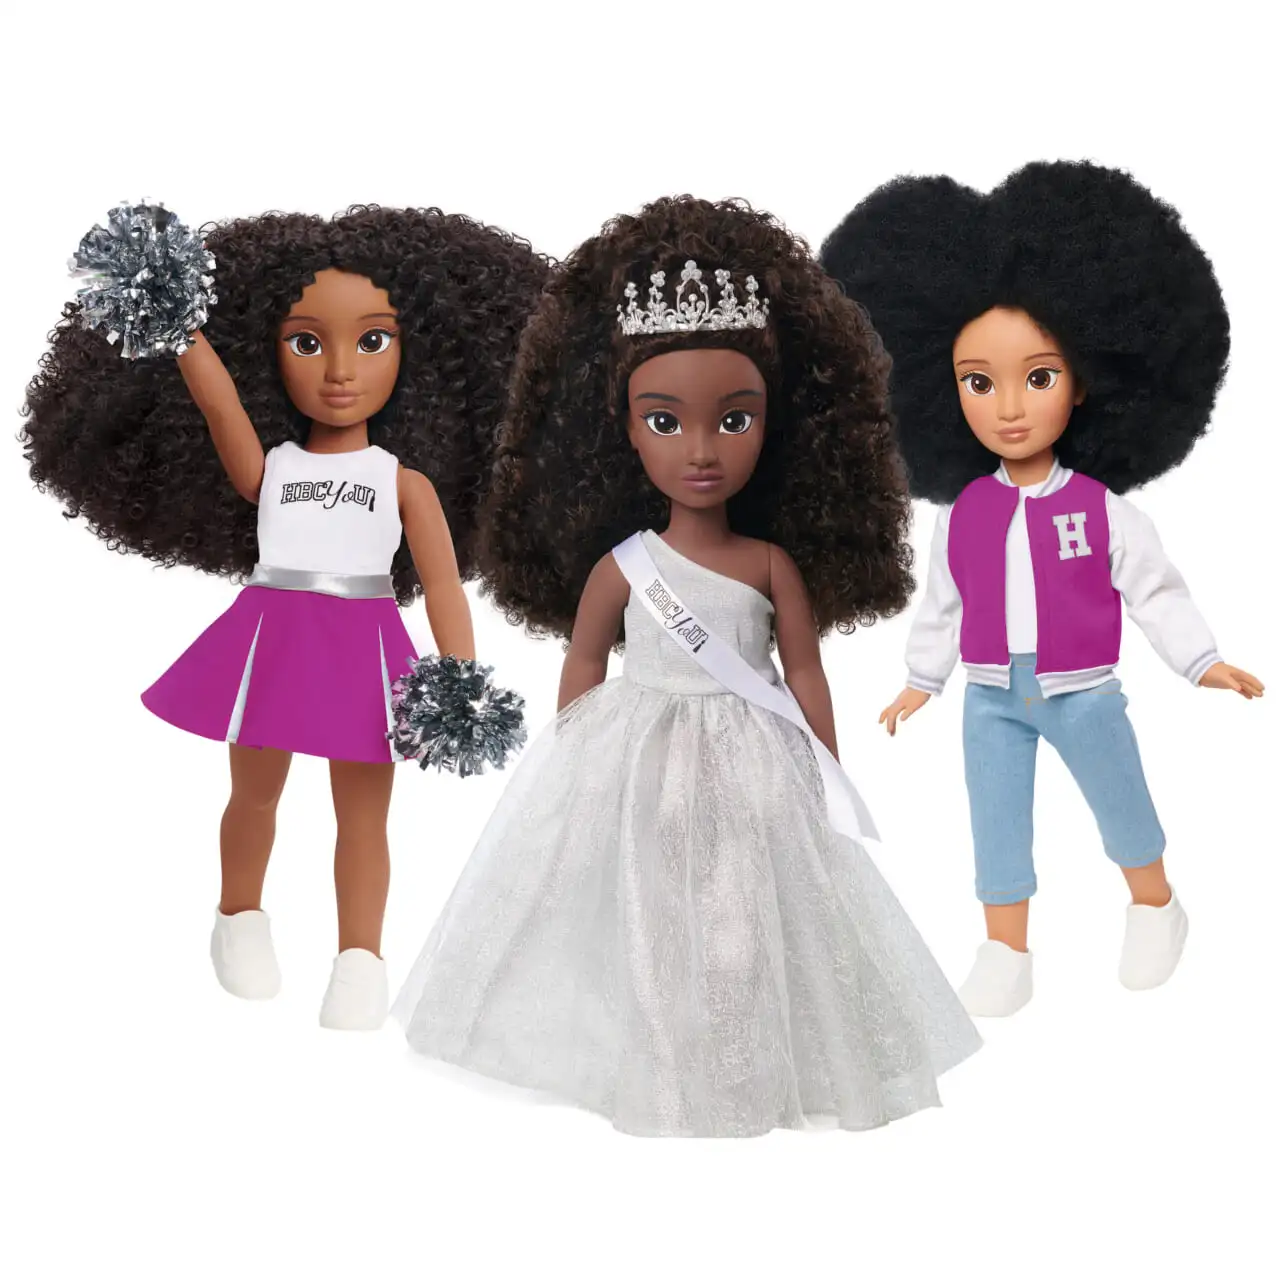 Modern and stylish' black 'Barbie' dolls are boosting children's